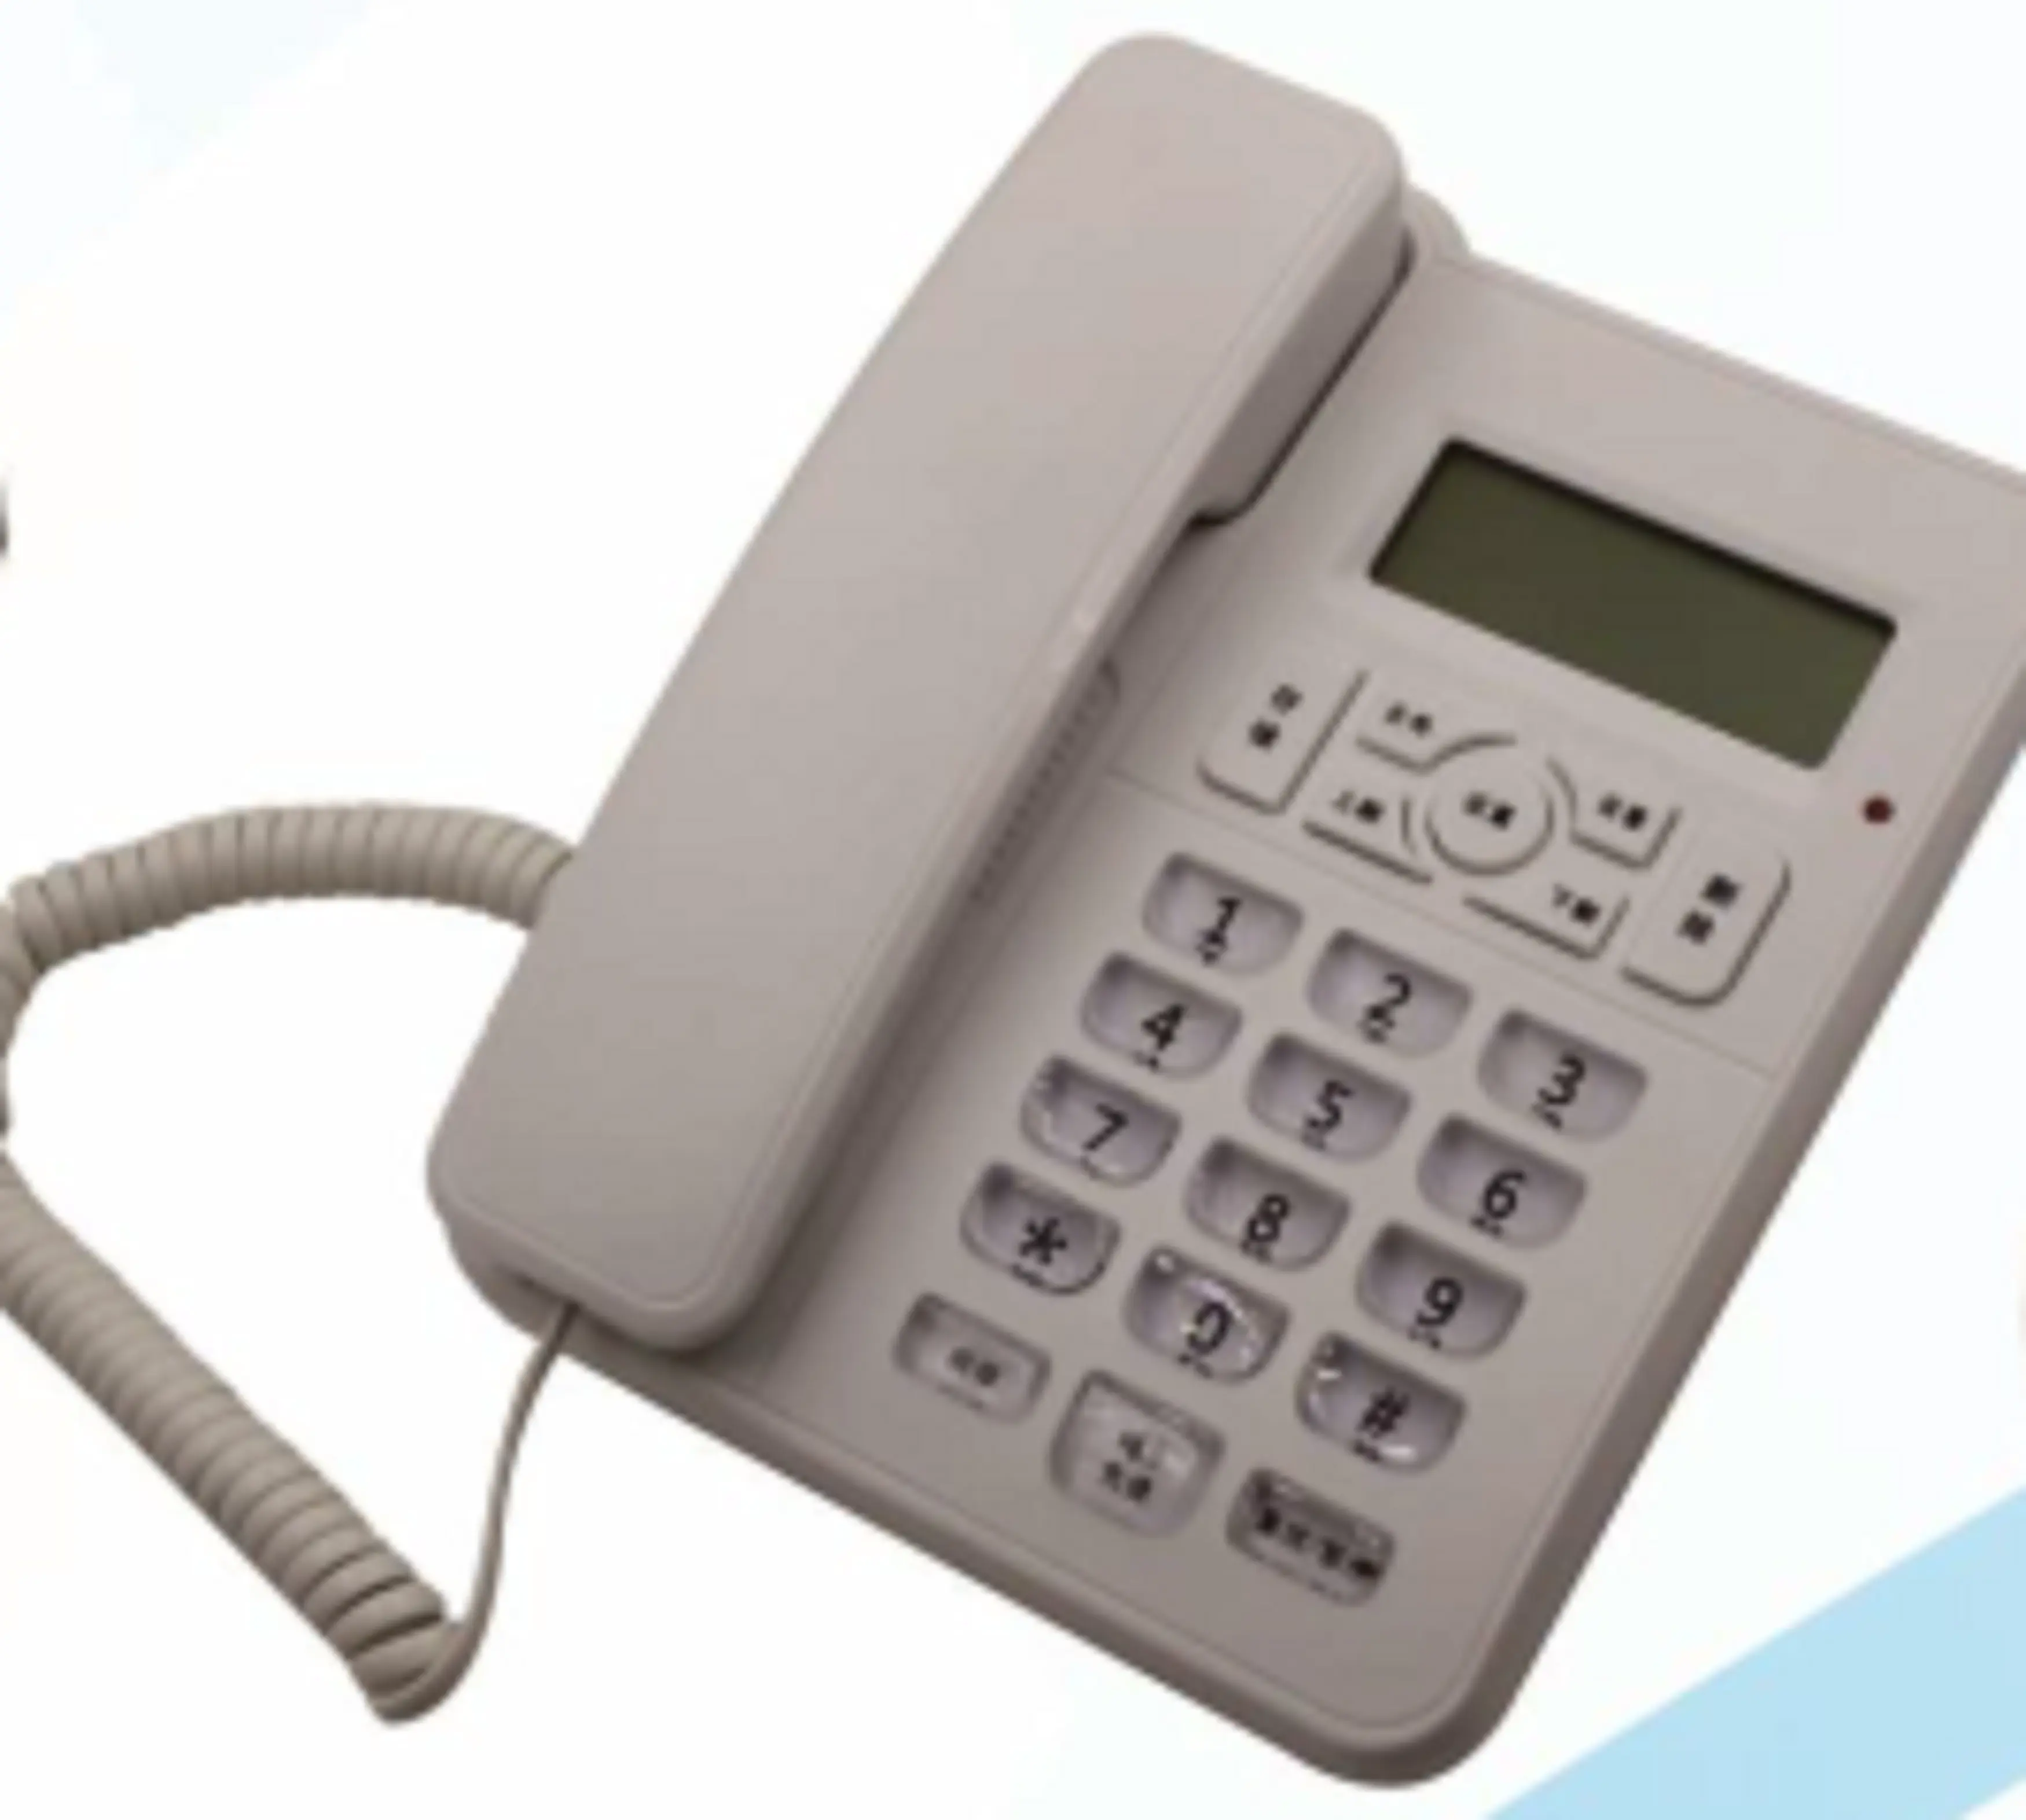 Hot Sale Cheap Price Caller ID Corded Phone Speaker Phone LCD Display Analog Telephone